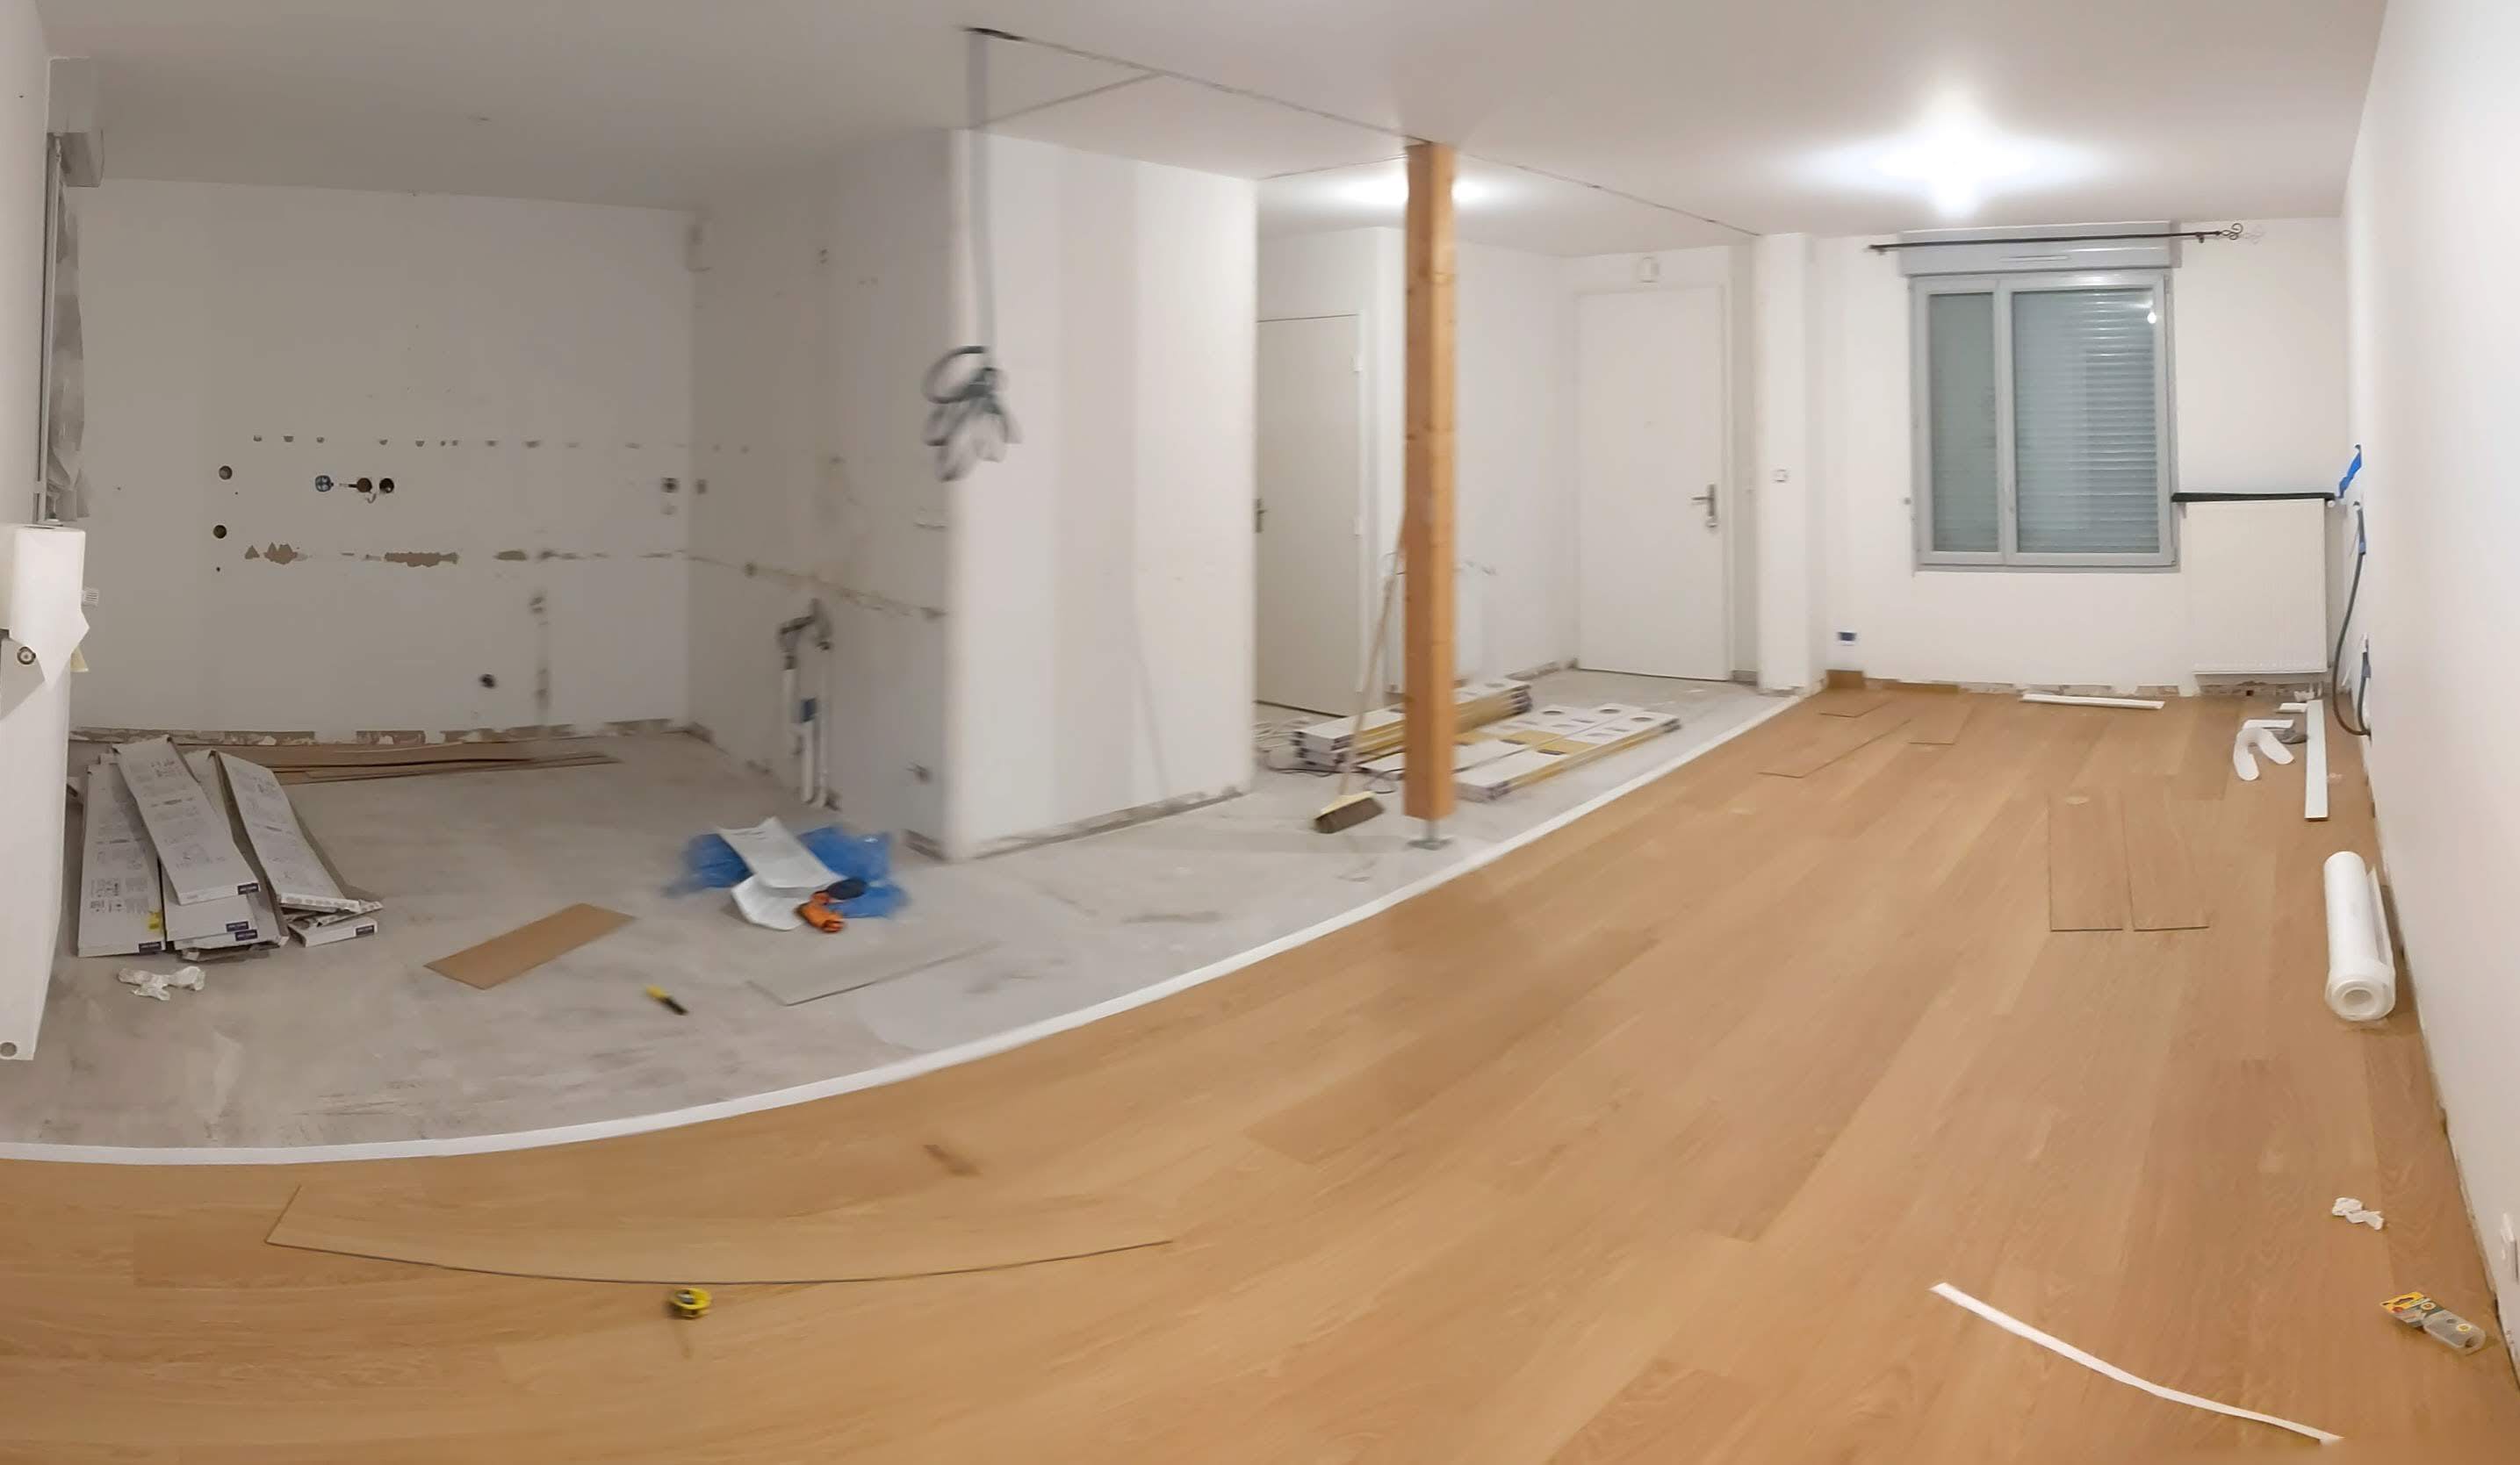 Installation of the new floor